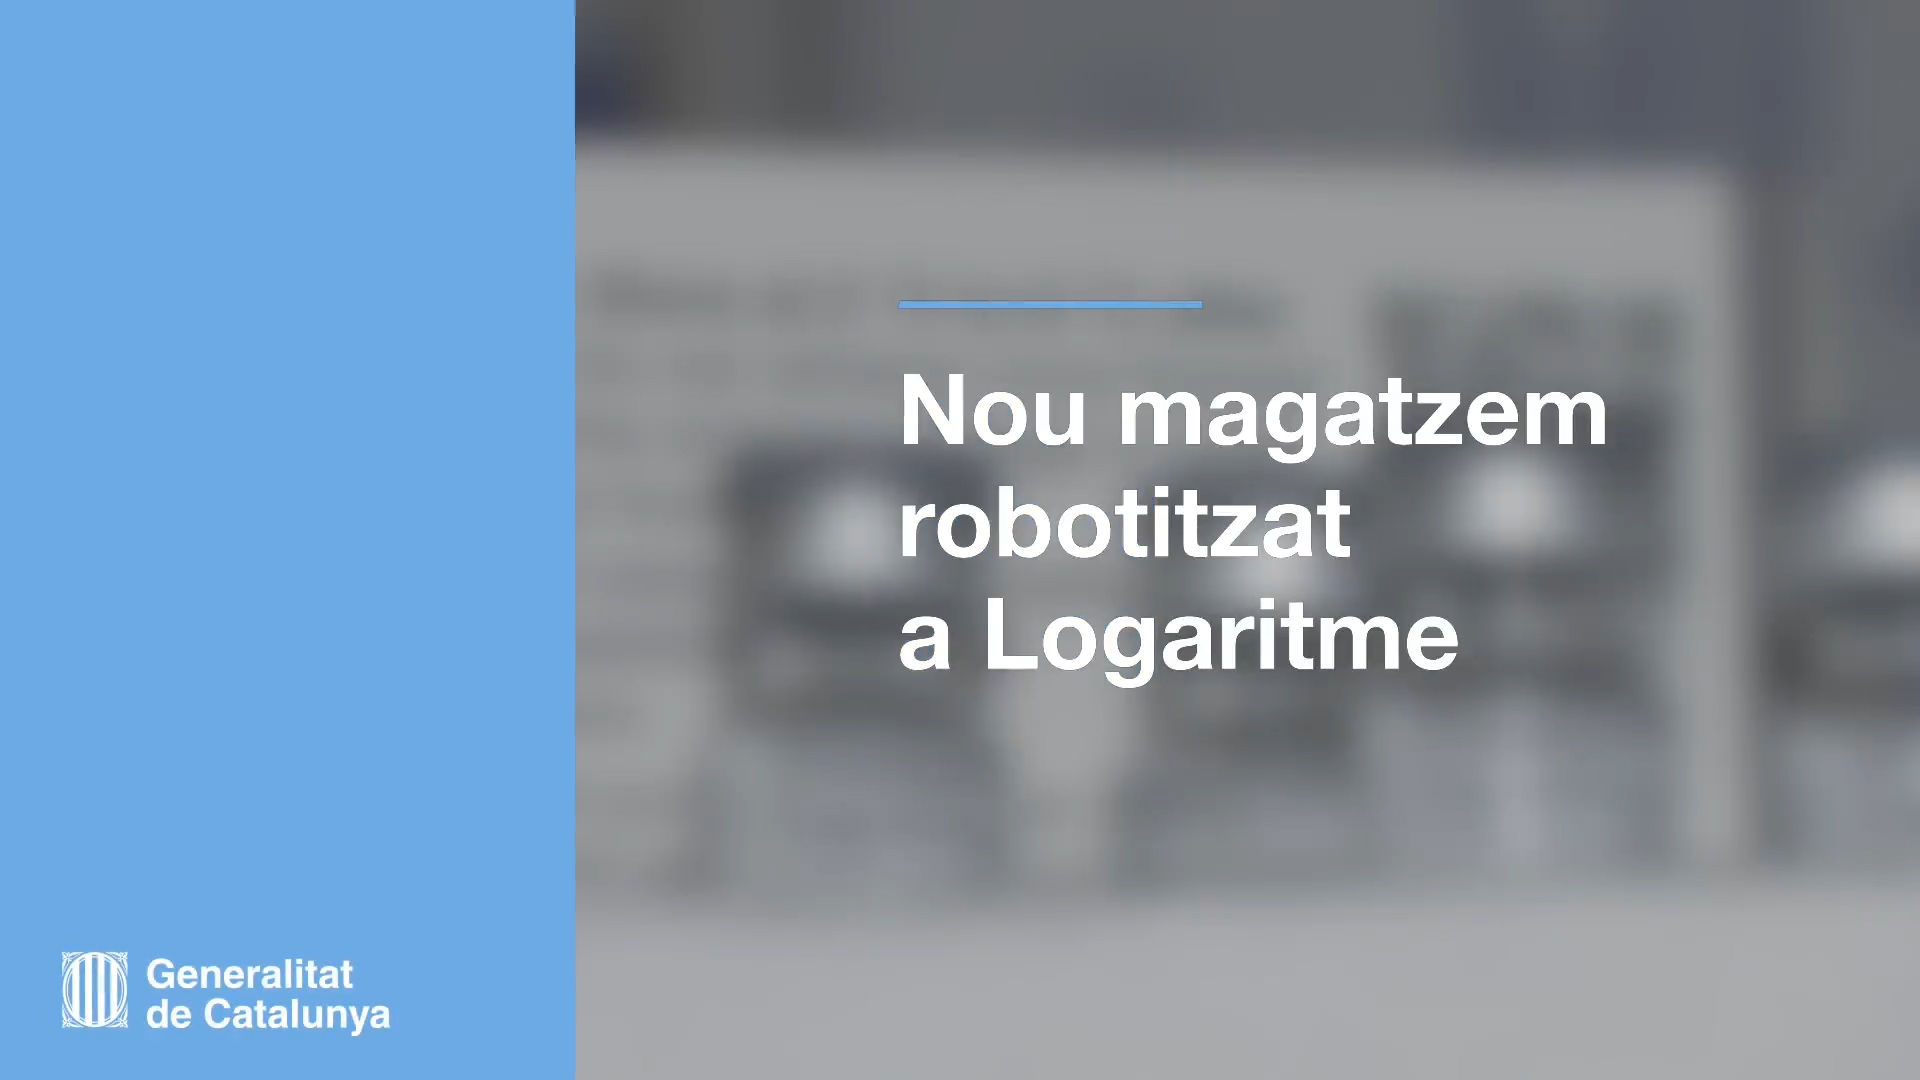 Nou magatzem robotitzat a Logaritme